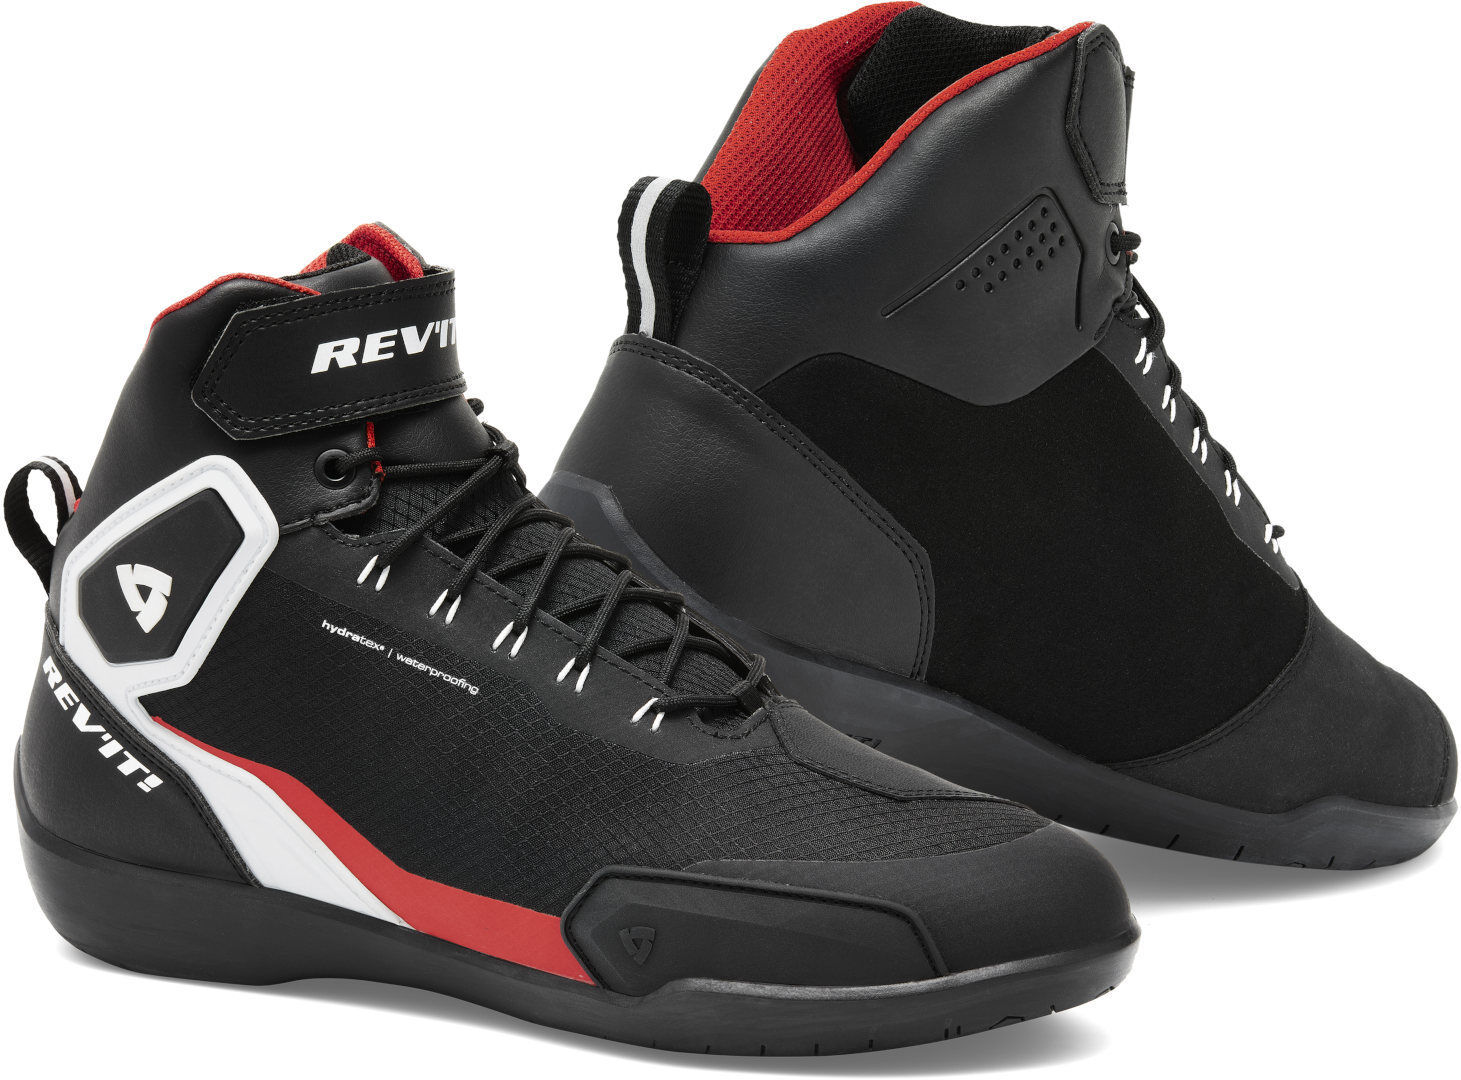 Revit G-Force H2O Zapatos impermeables para motocicletas - Negro Blanco Rojo (45)